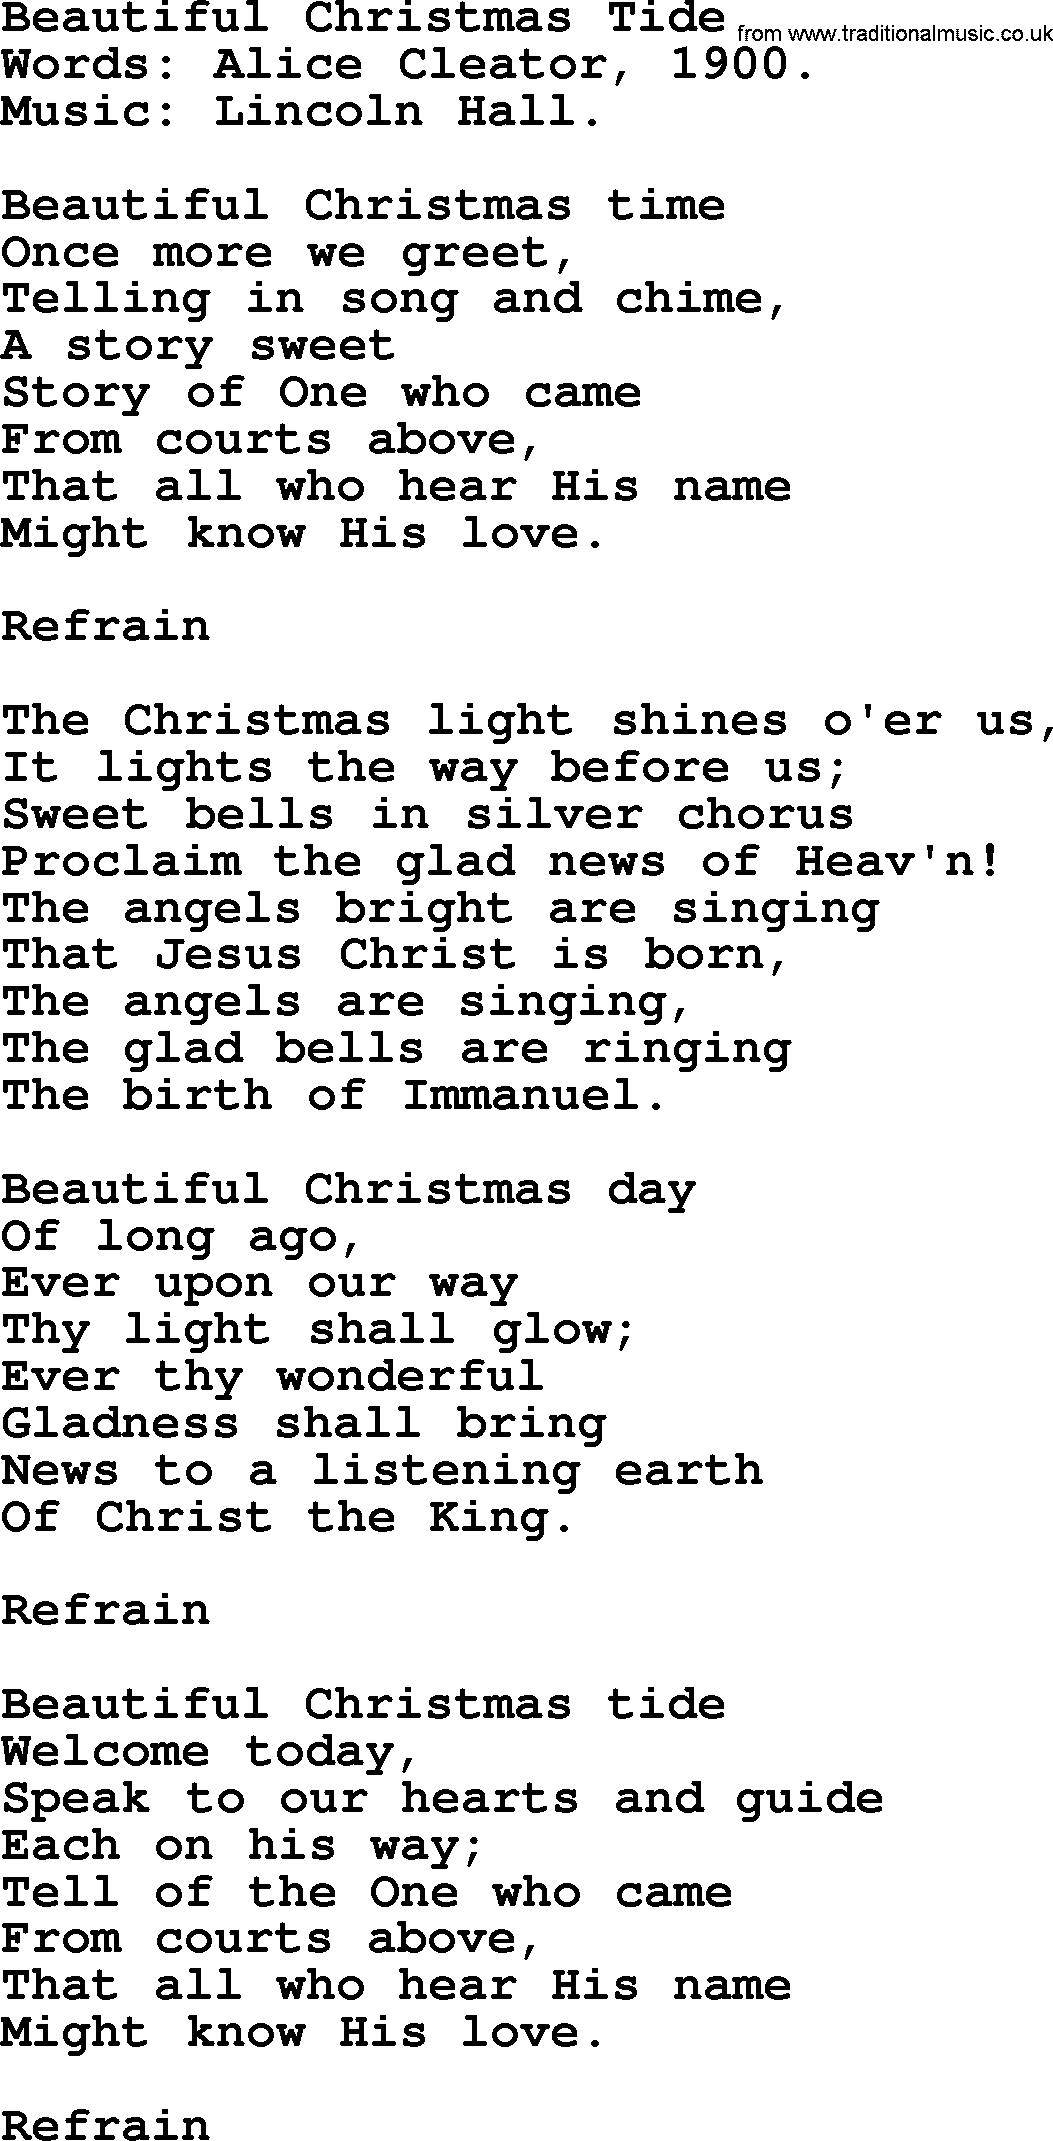 Christmas Hymns, Carols and Songs, title: Beautiful Christmas Tide, lyrics with PDF